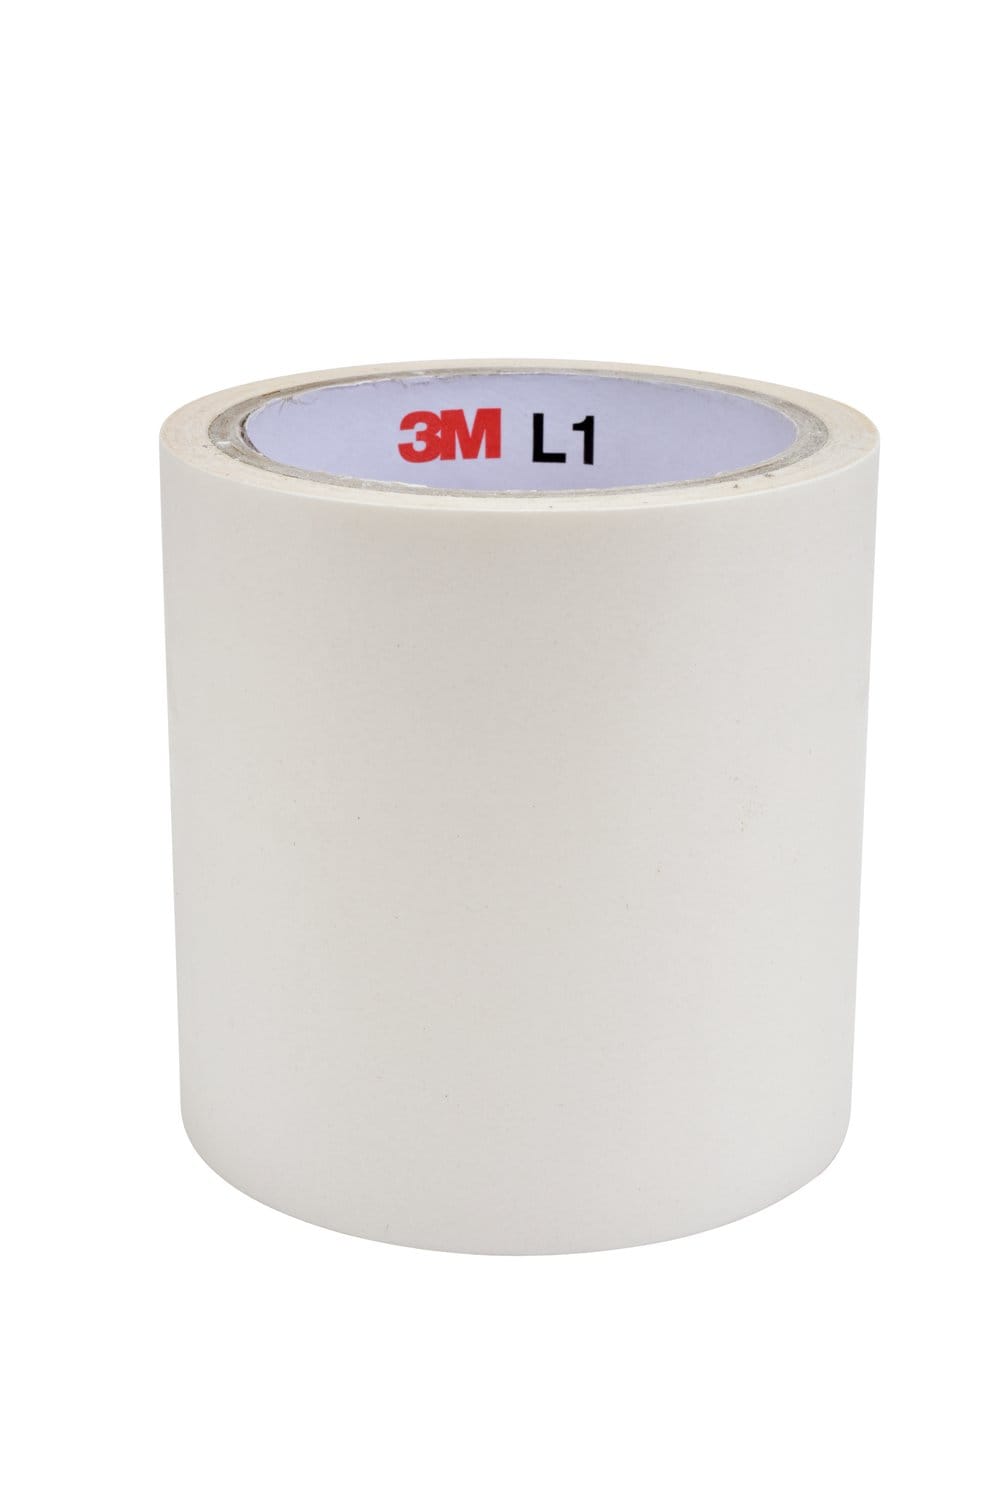 7100089838 - 3M Scrim Reinforced Adhesive Tape L1+RT, Clear, 1524 mm x 230 m, 0.08
mm, 6 rolls per pallet